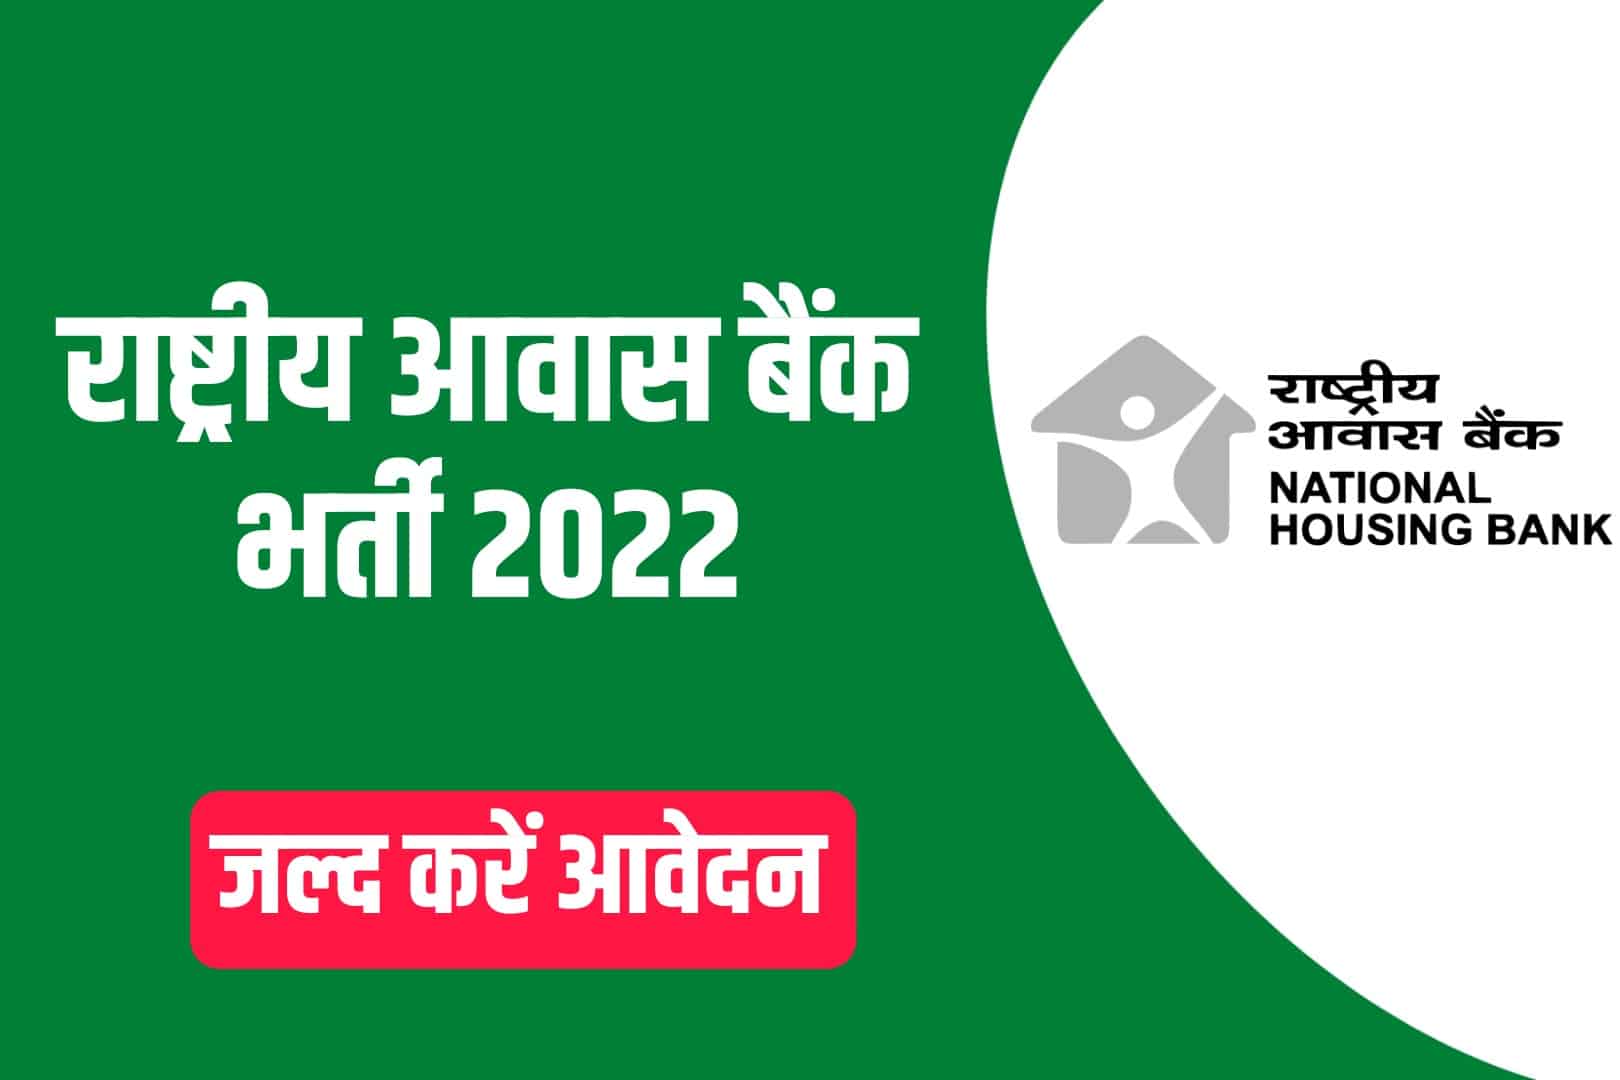 National Housing Bank Recruitment 2022 Online Form | राष्ट्रीय आवास बैंक भर्ती 2022